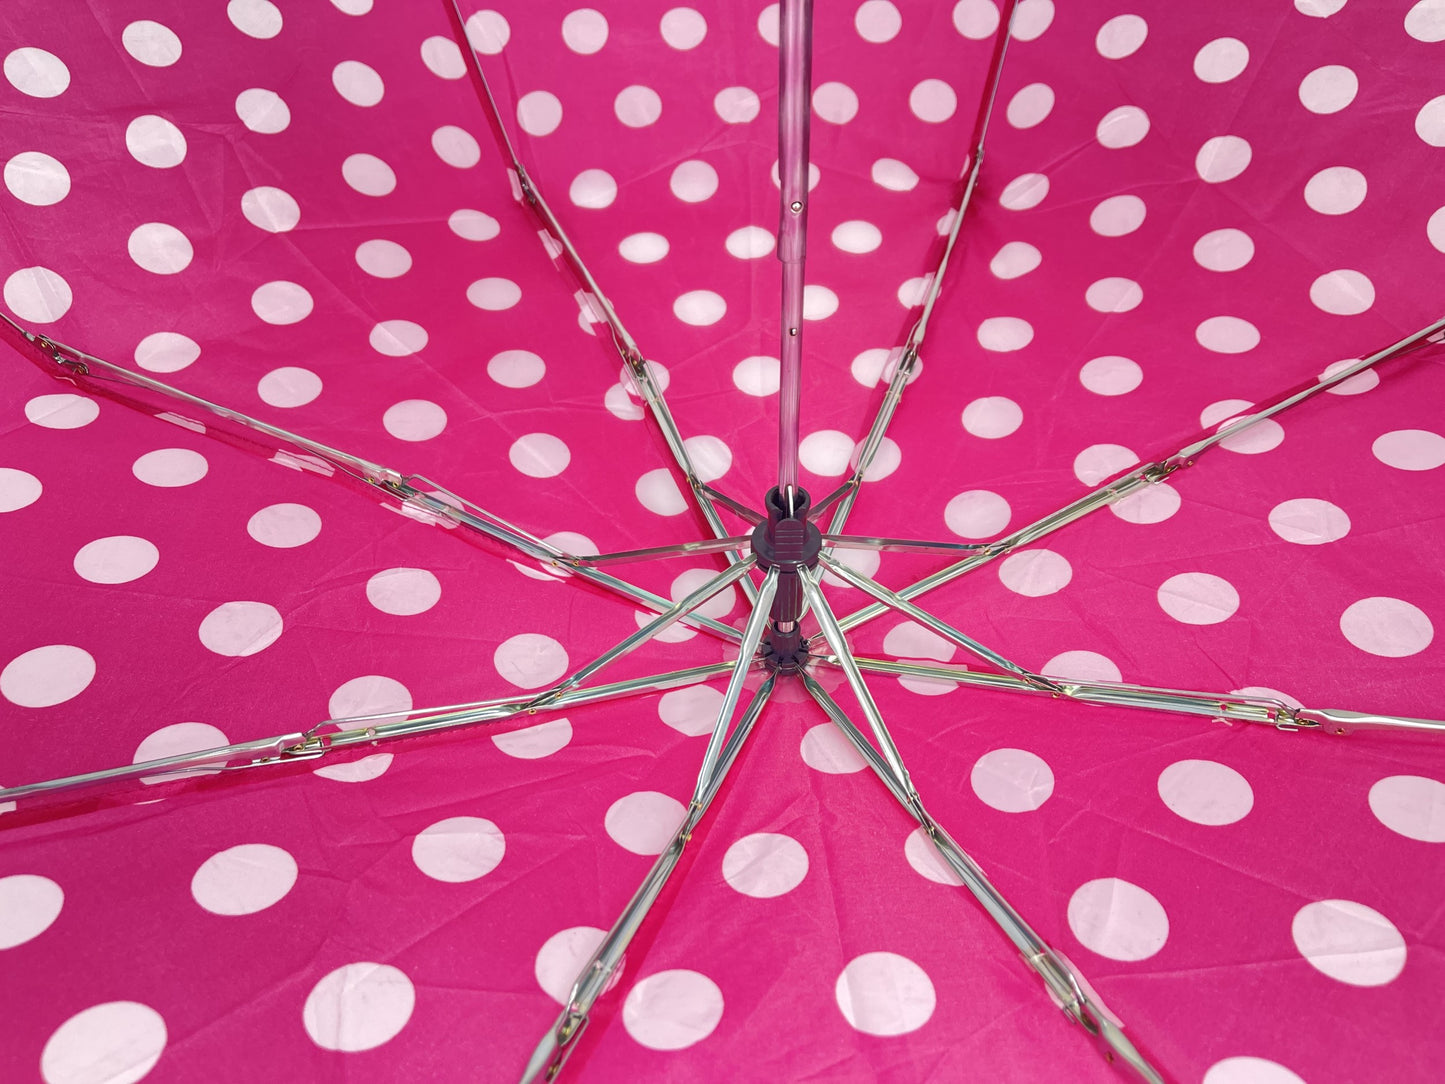 Ladies Patterned Compact Mini Pocket Umbrella